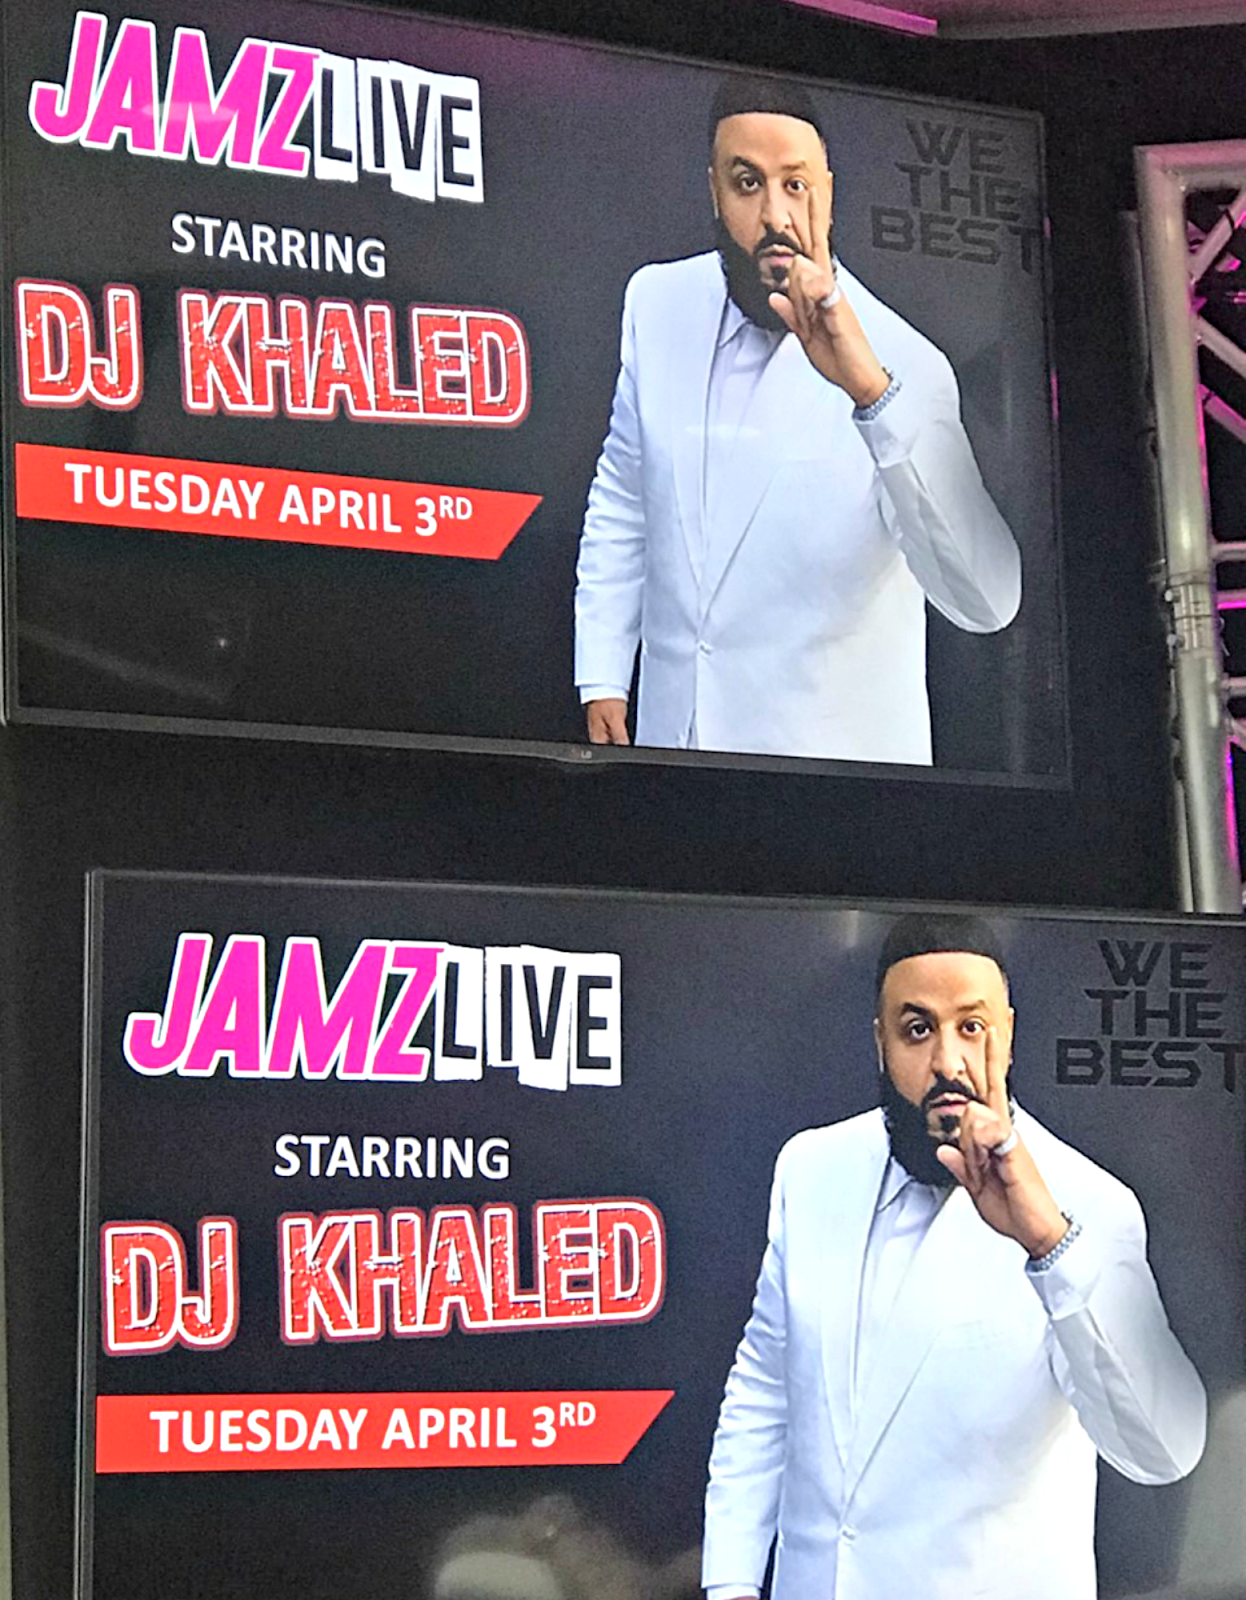 DJ Khaled/ Event/ Miami/ 99JamzLive